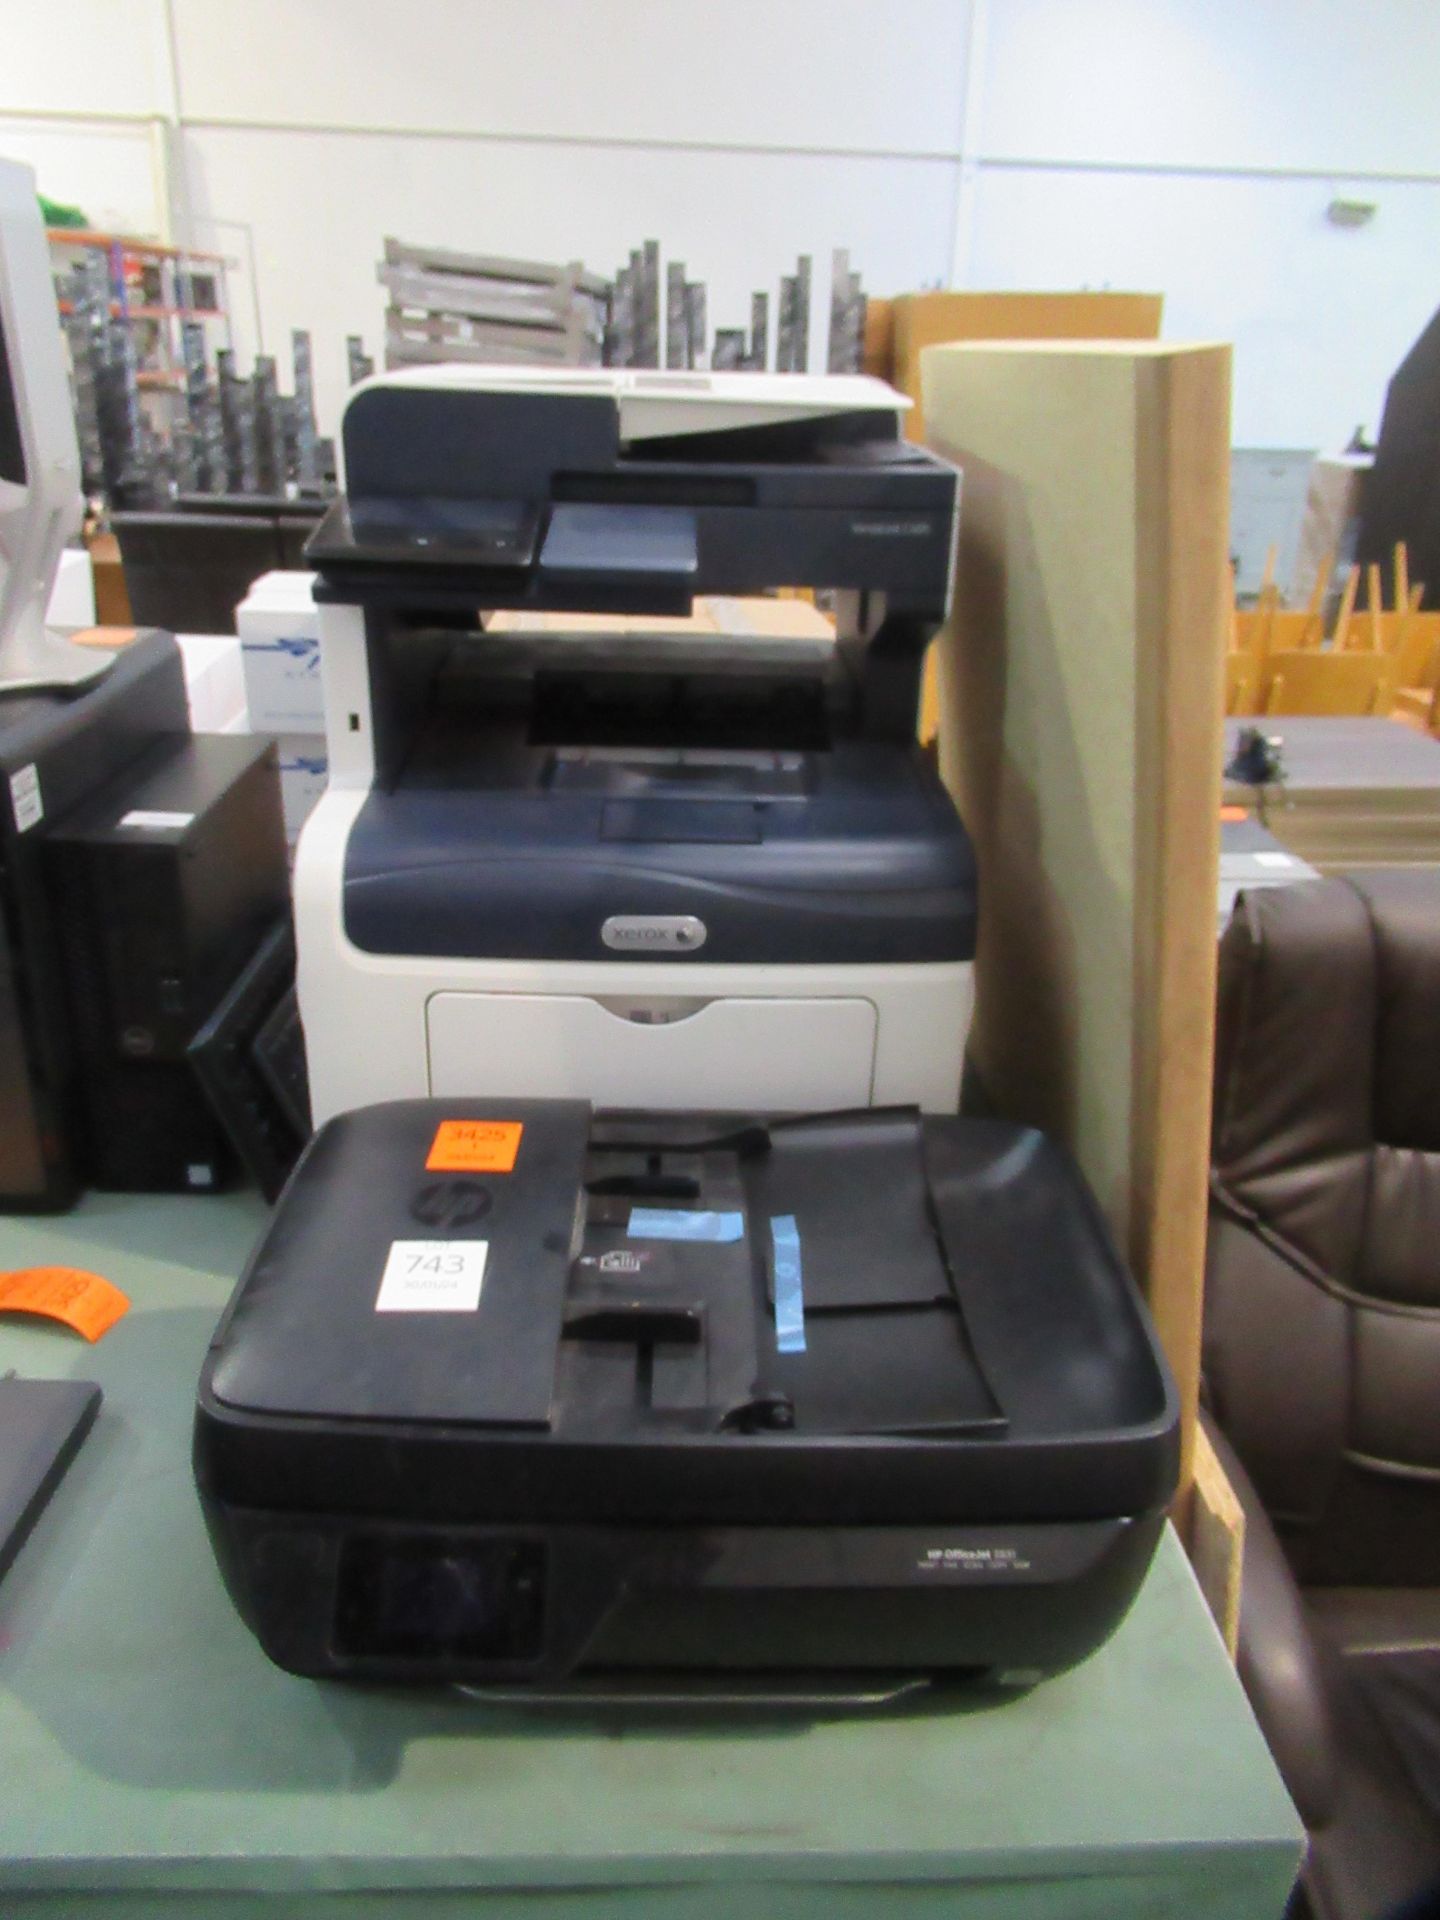 HP Office Jet 3831 Printer/Scanner and a Xerox Versalink C405 Printer/Scanner